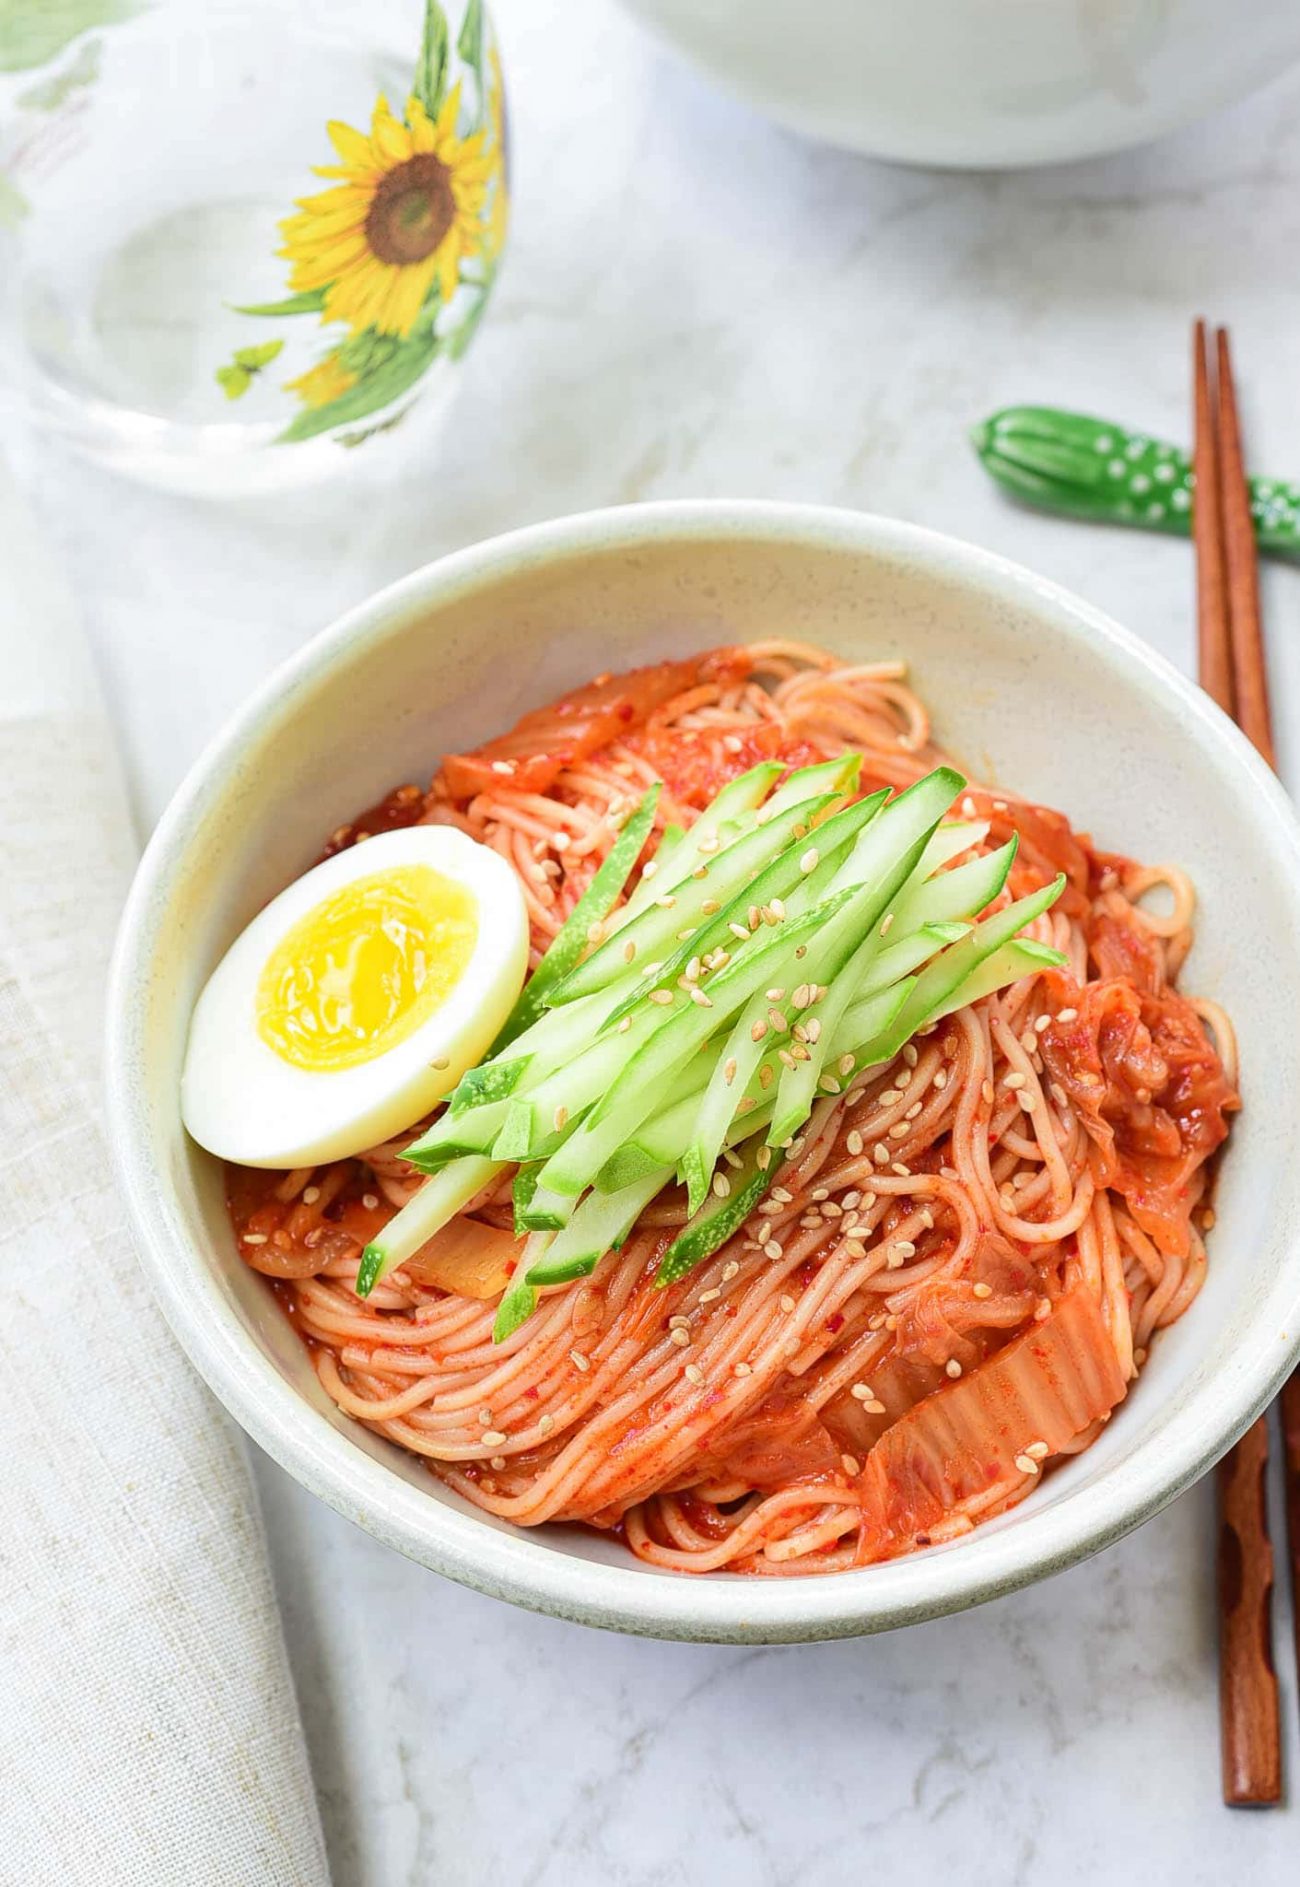 DSC 4873 3 e1615133620457 - Kimchi Bibim Guksu (Spicy Cold Noodles with Kimchi)